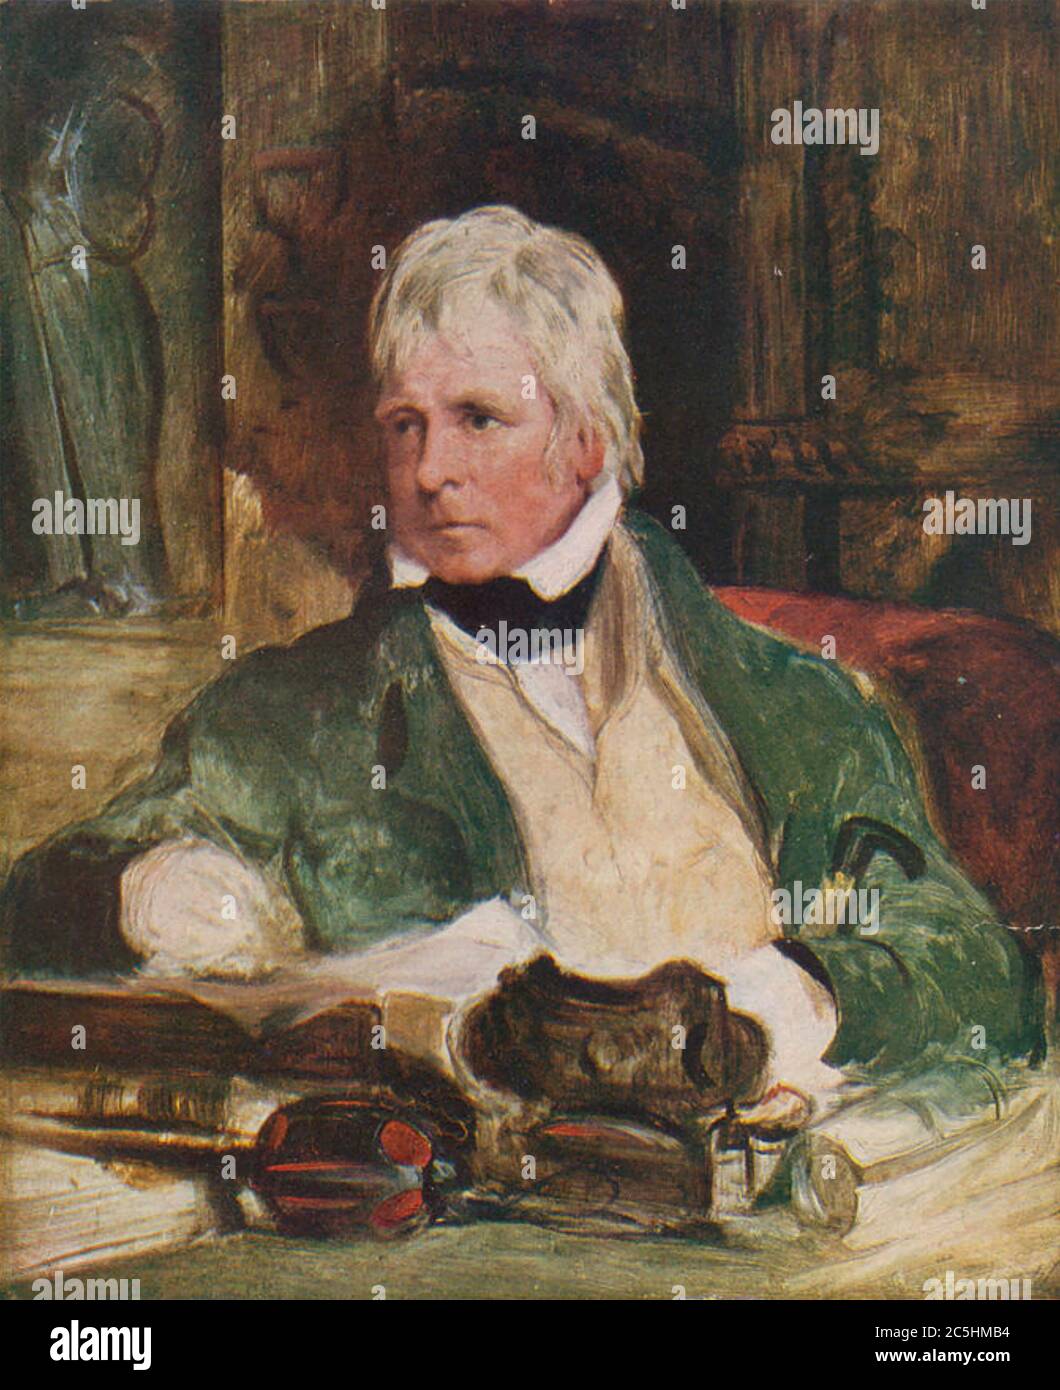 WALTER SCOTT (1771-1832) novelista histórico escocés Foto de stock